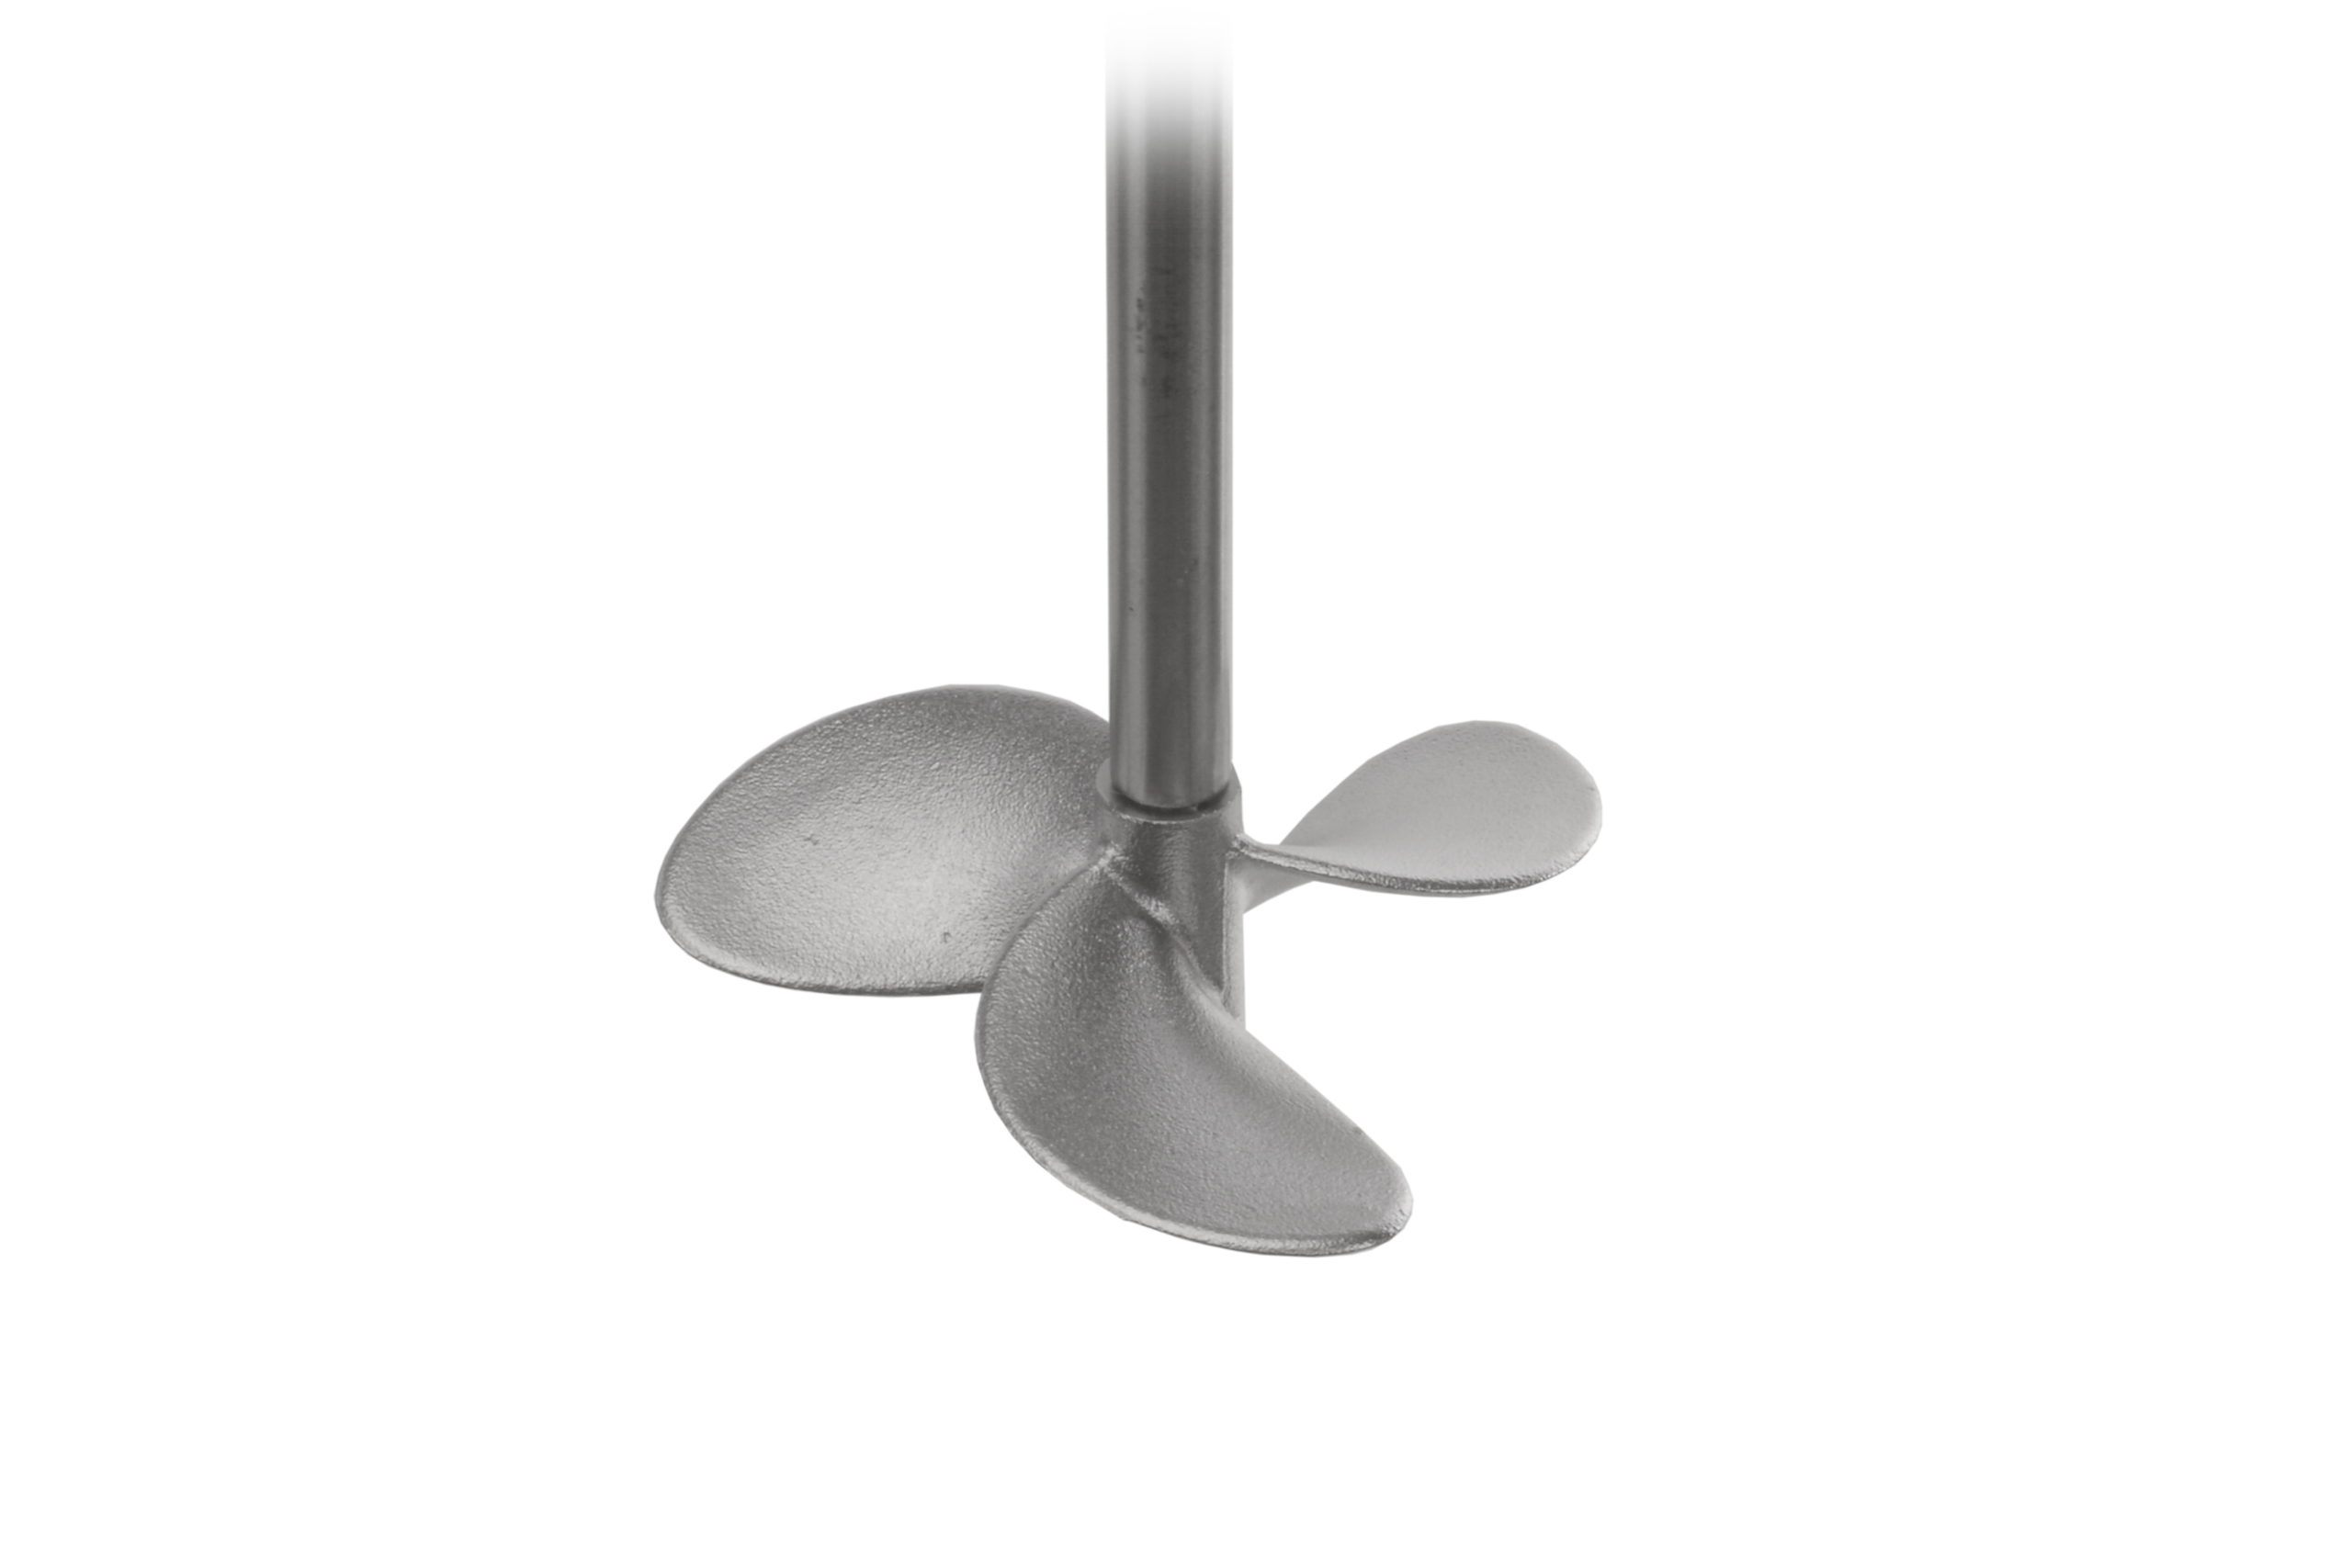 Propeller stirrer, 3 blades – 1 casting piece